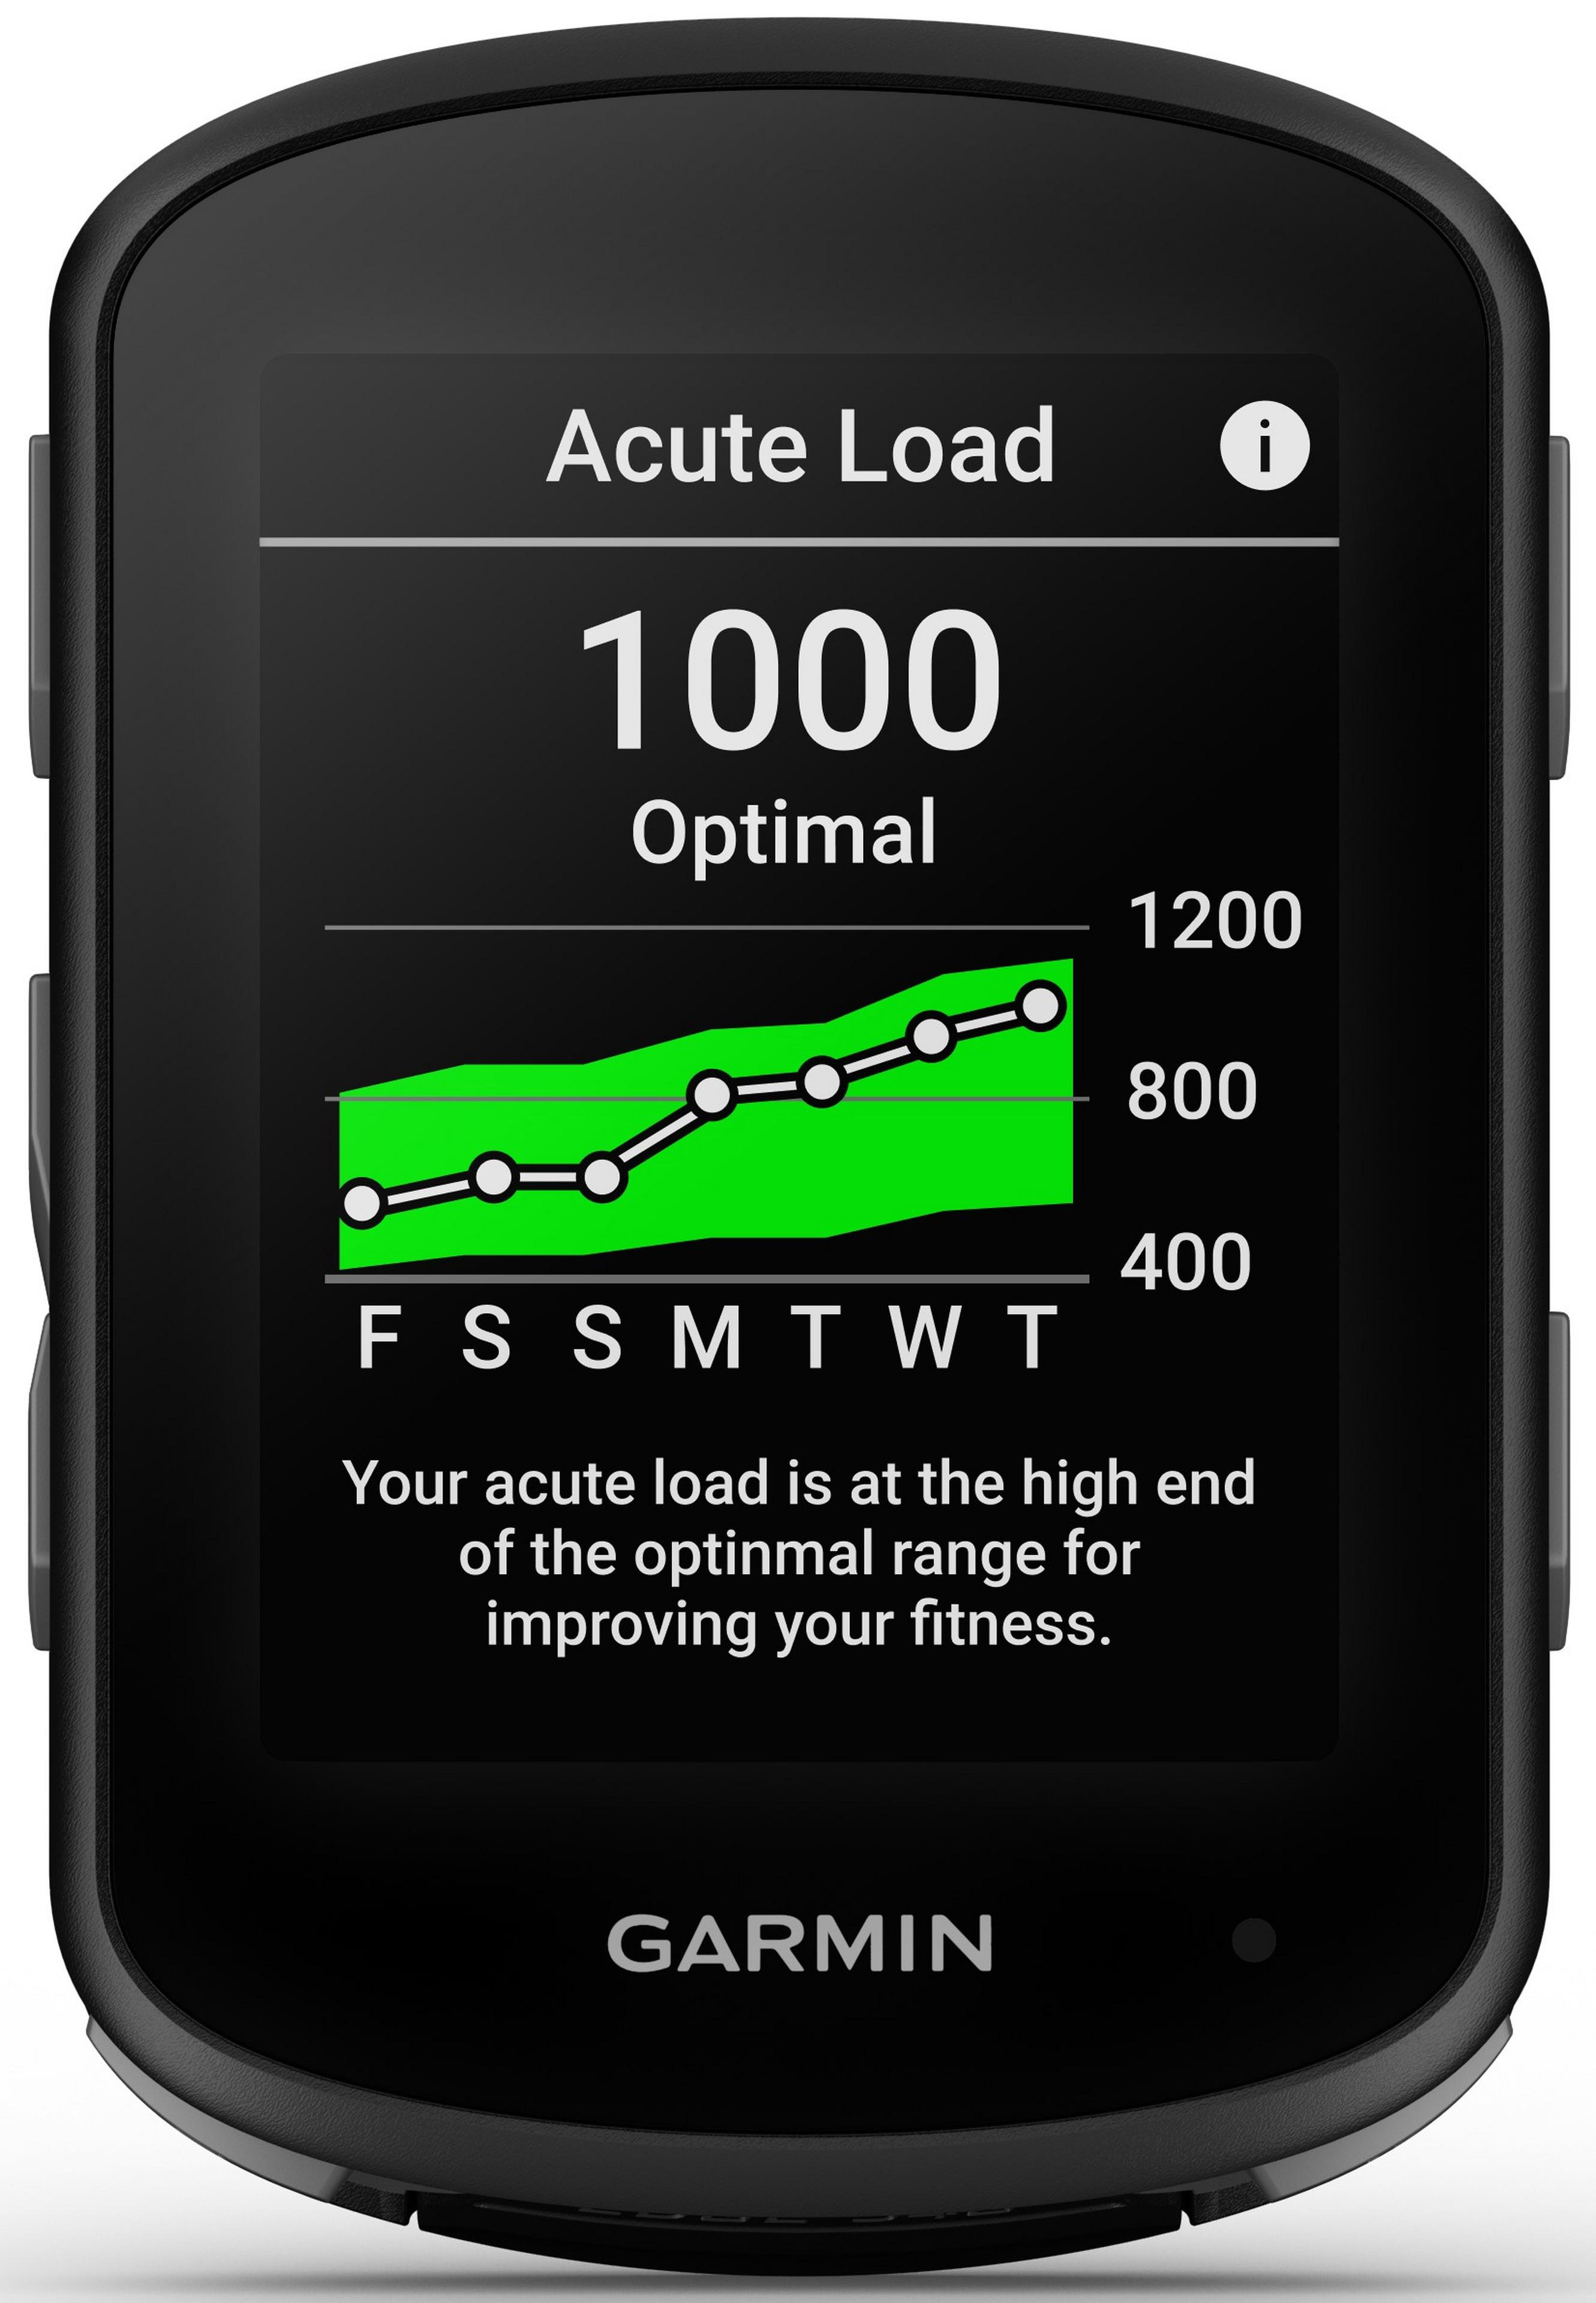 Garmin Edge 800 - Ride With GPS HelpRide With GPS Help